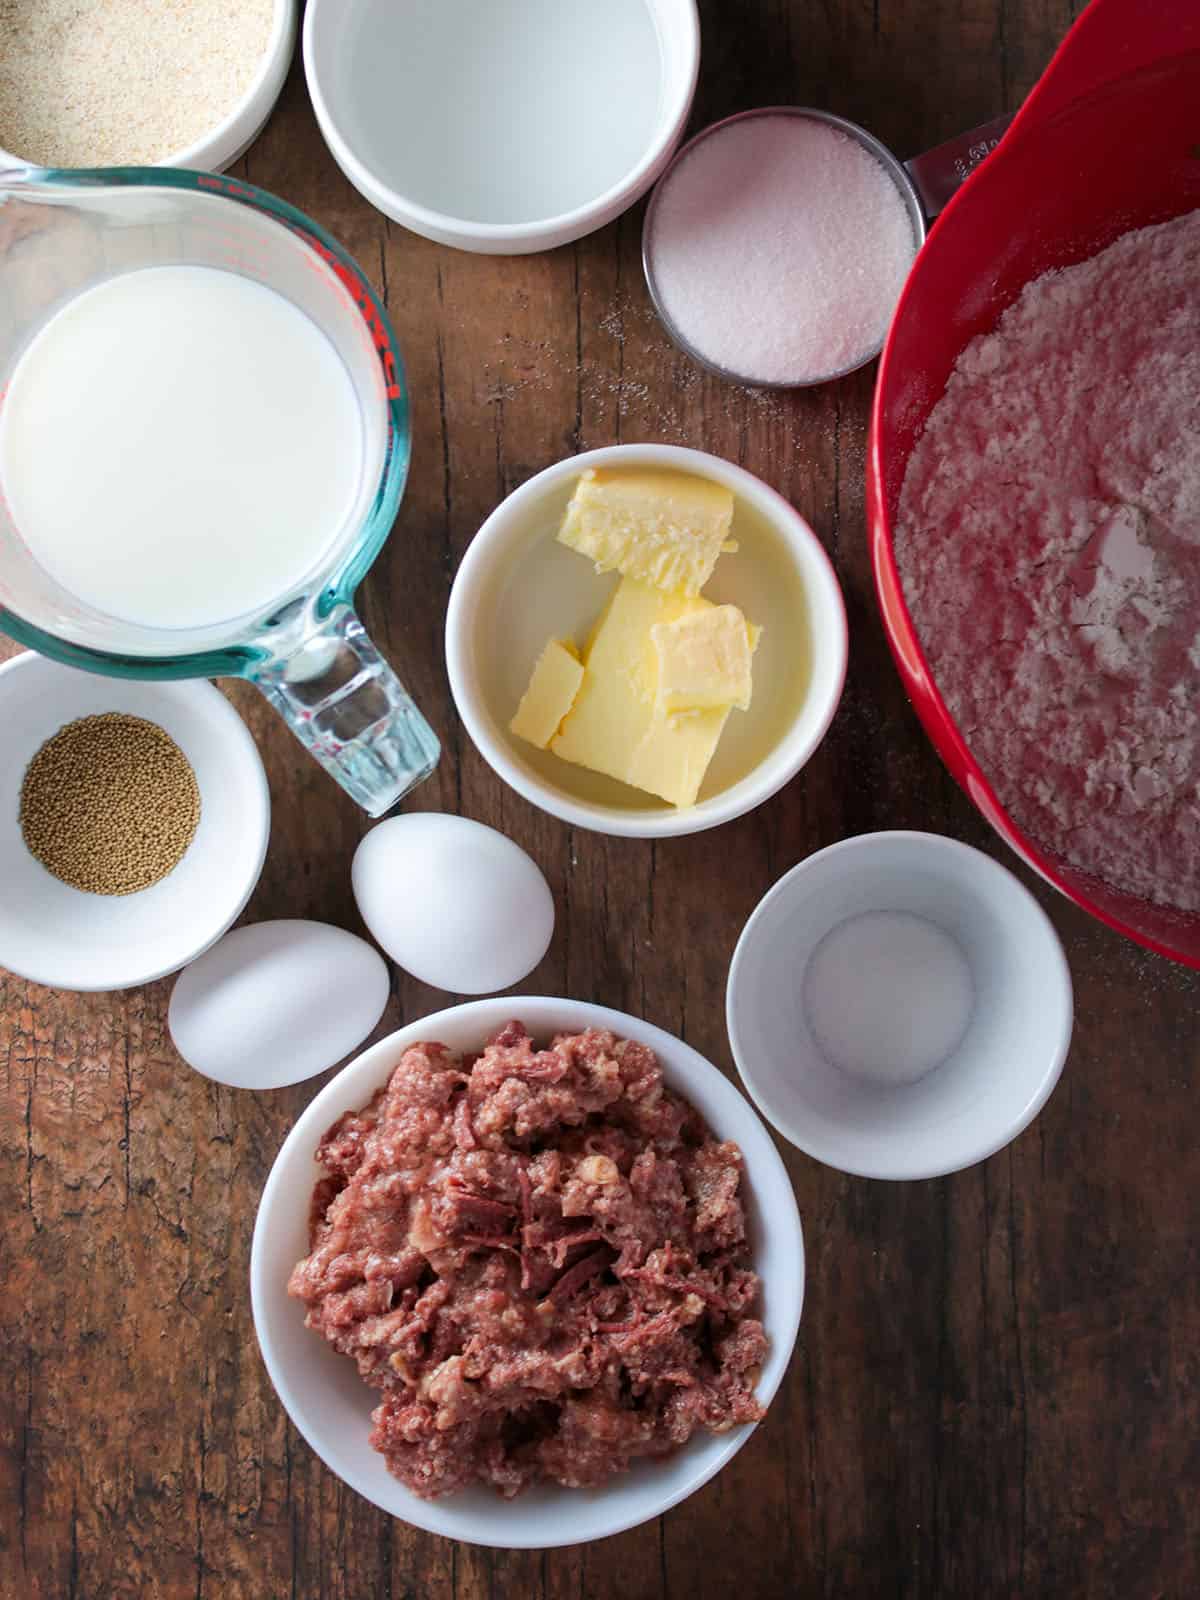 flour, corned beef, butter, eggs, yeast, milk, water, bread crumbs, sugar, salt in bowls